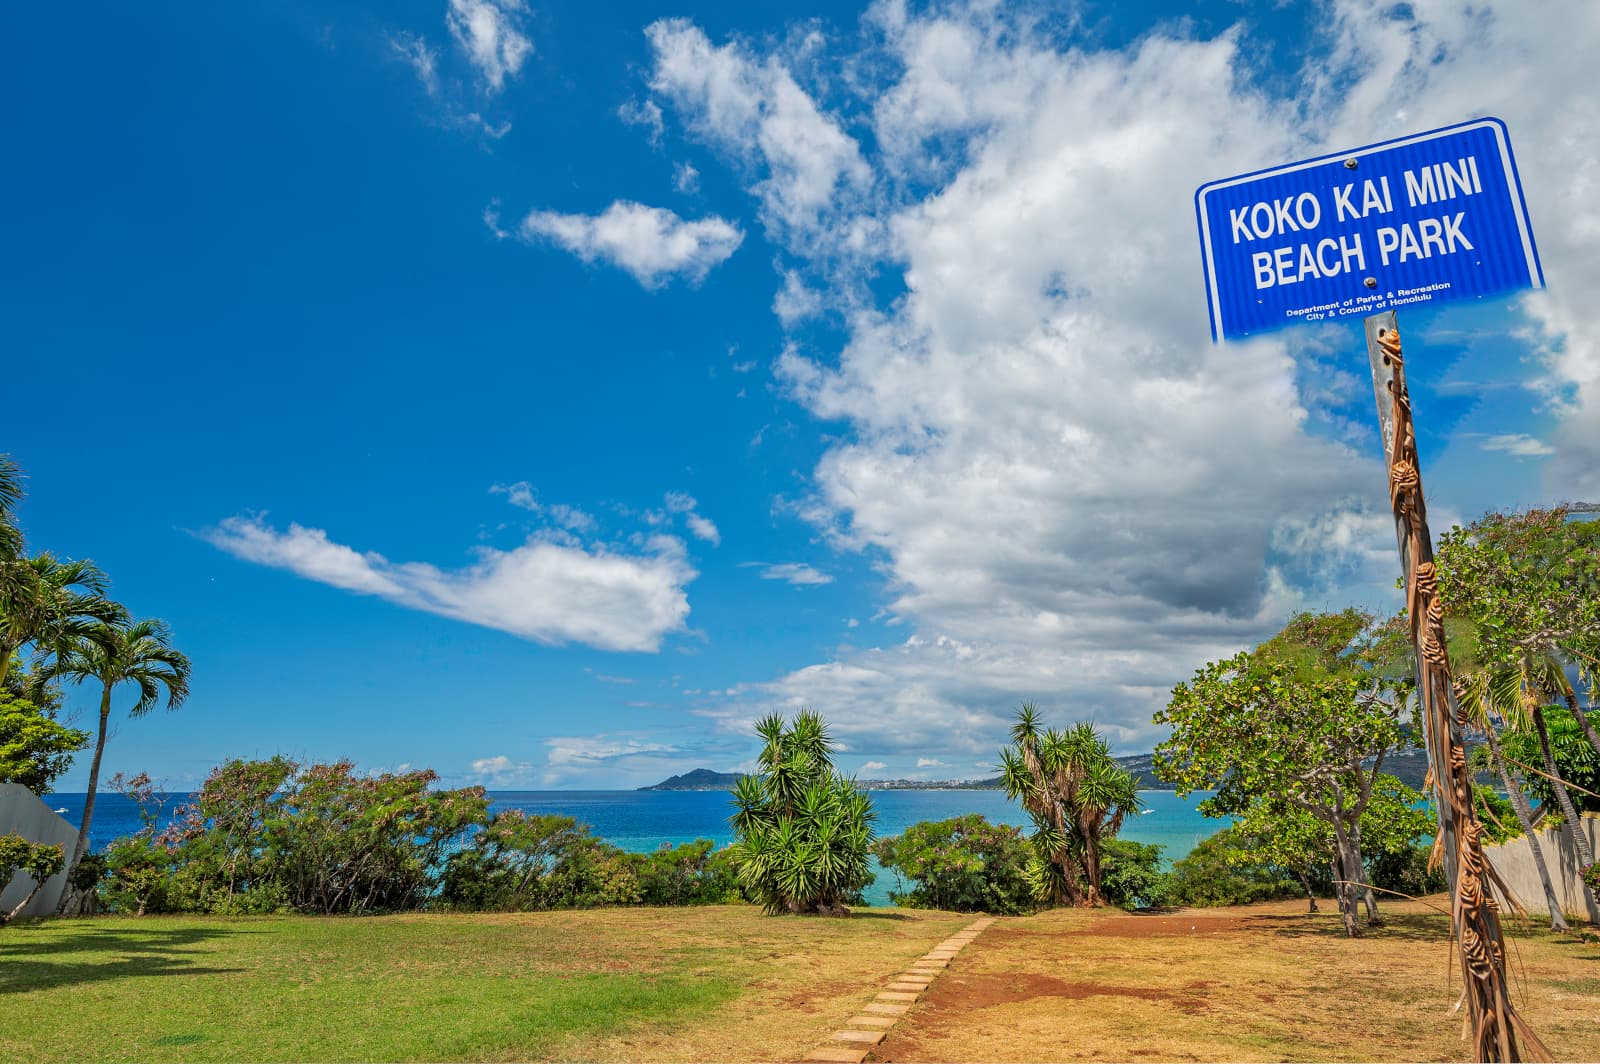 Sign that says Koko Kai Mini Beach Park overlooking grass, trees, and the ocean beyond